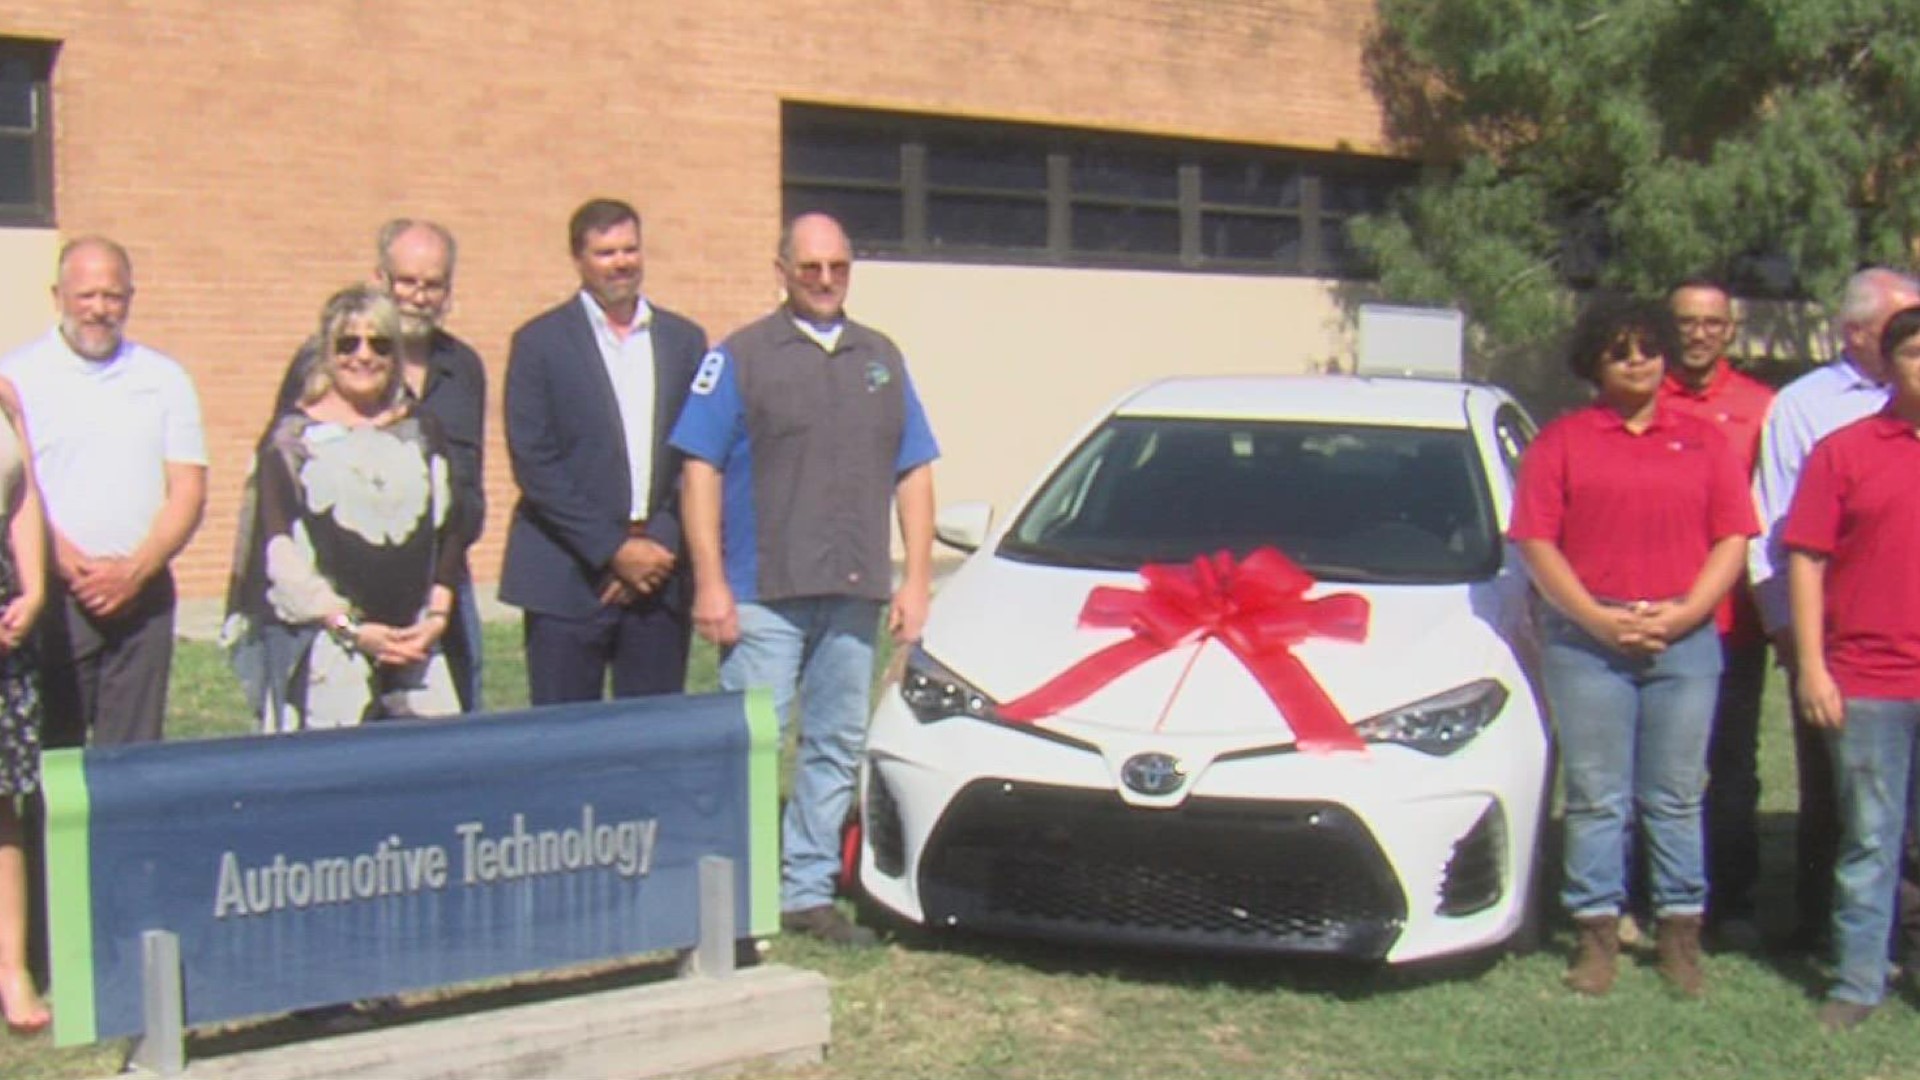 Toyota donates Corolla model to Del Mar's automotive technology program